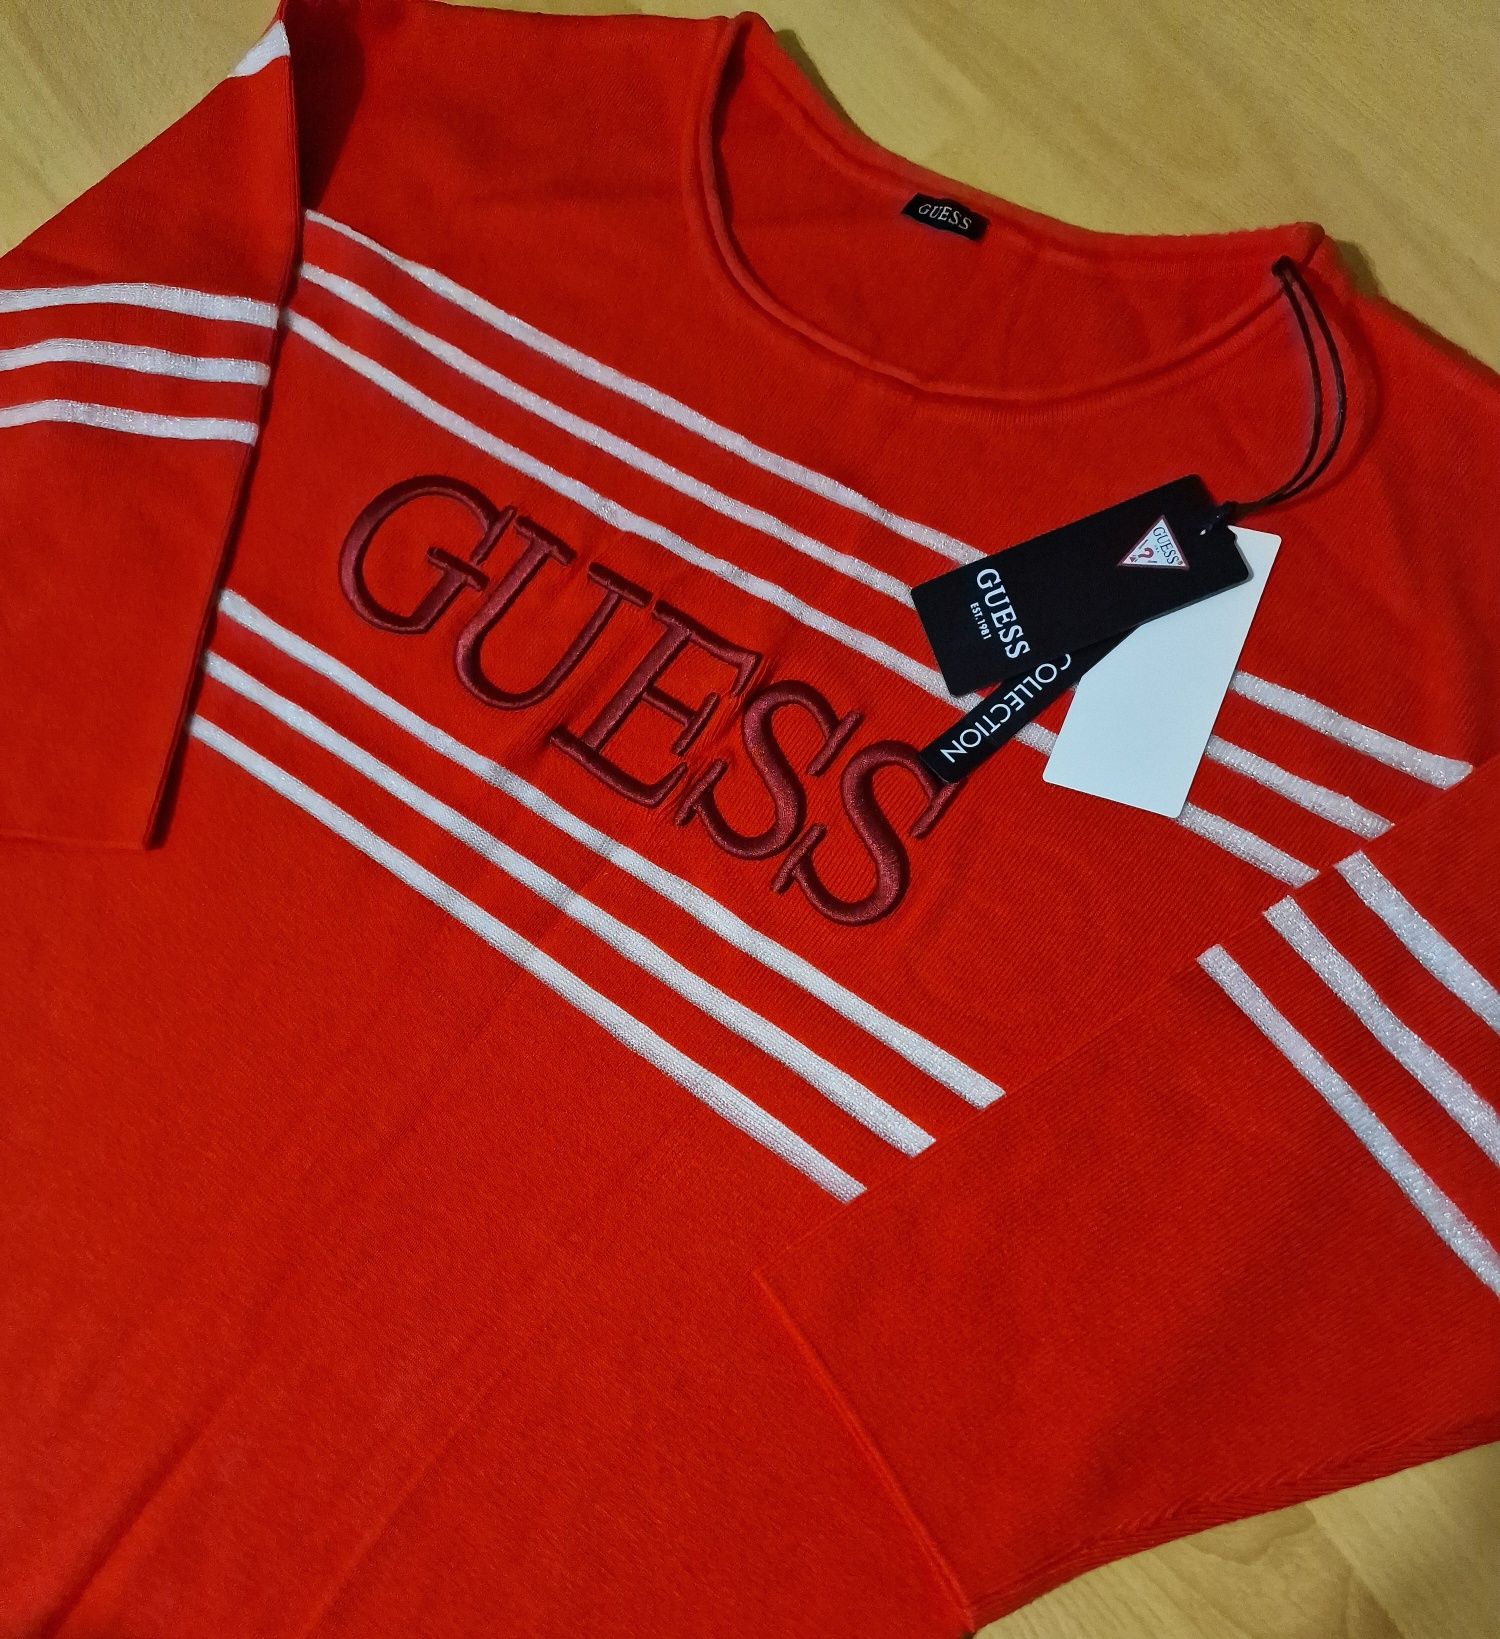 Bluza originala Guess, Italia,insertii lurex,